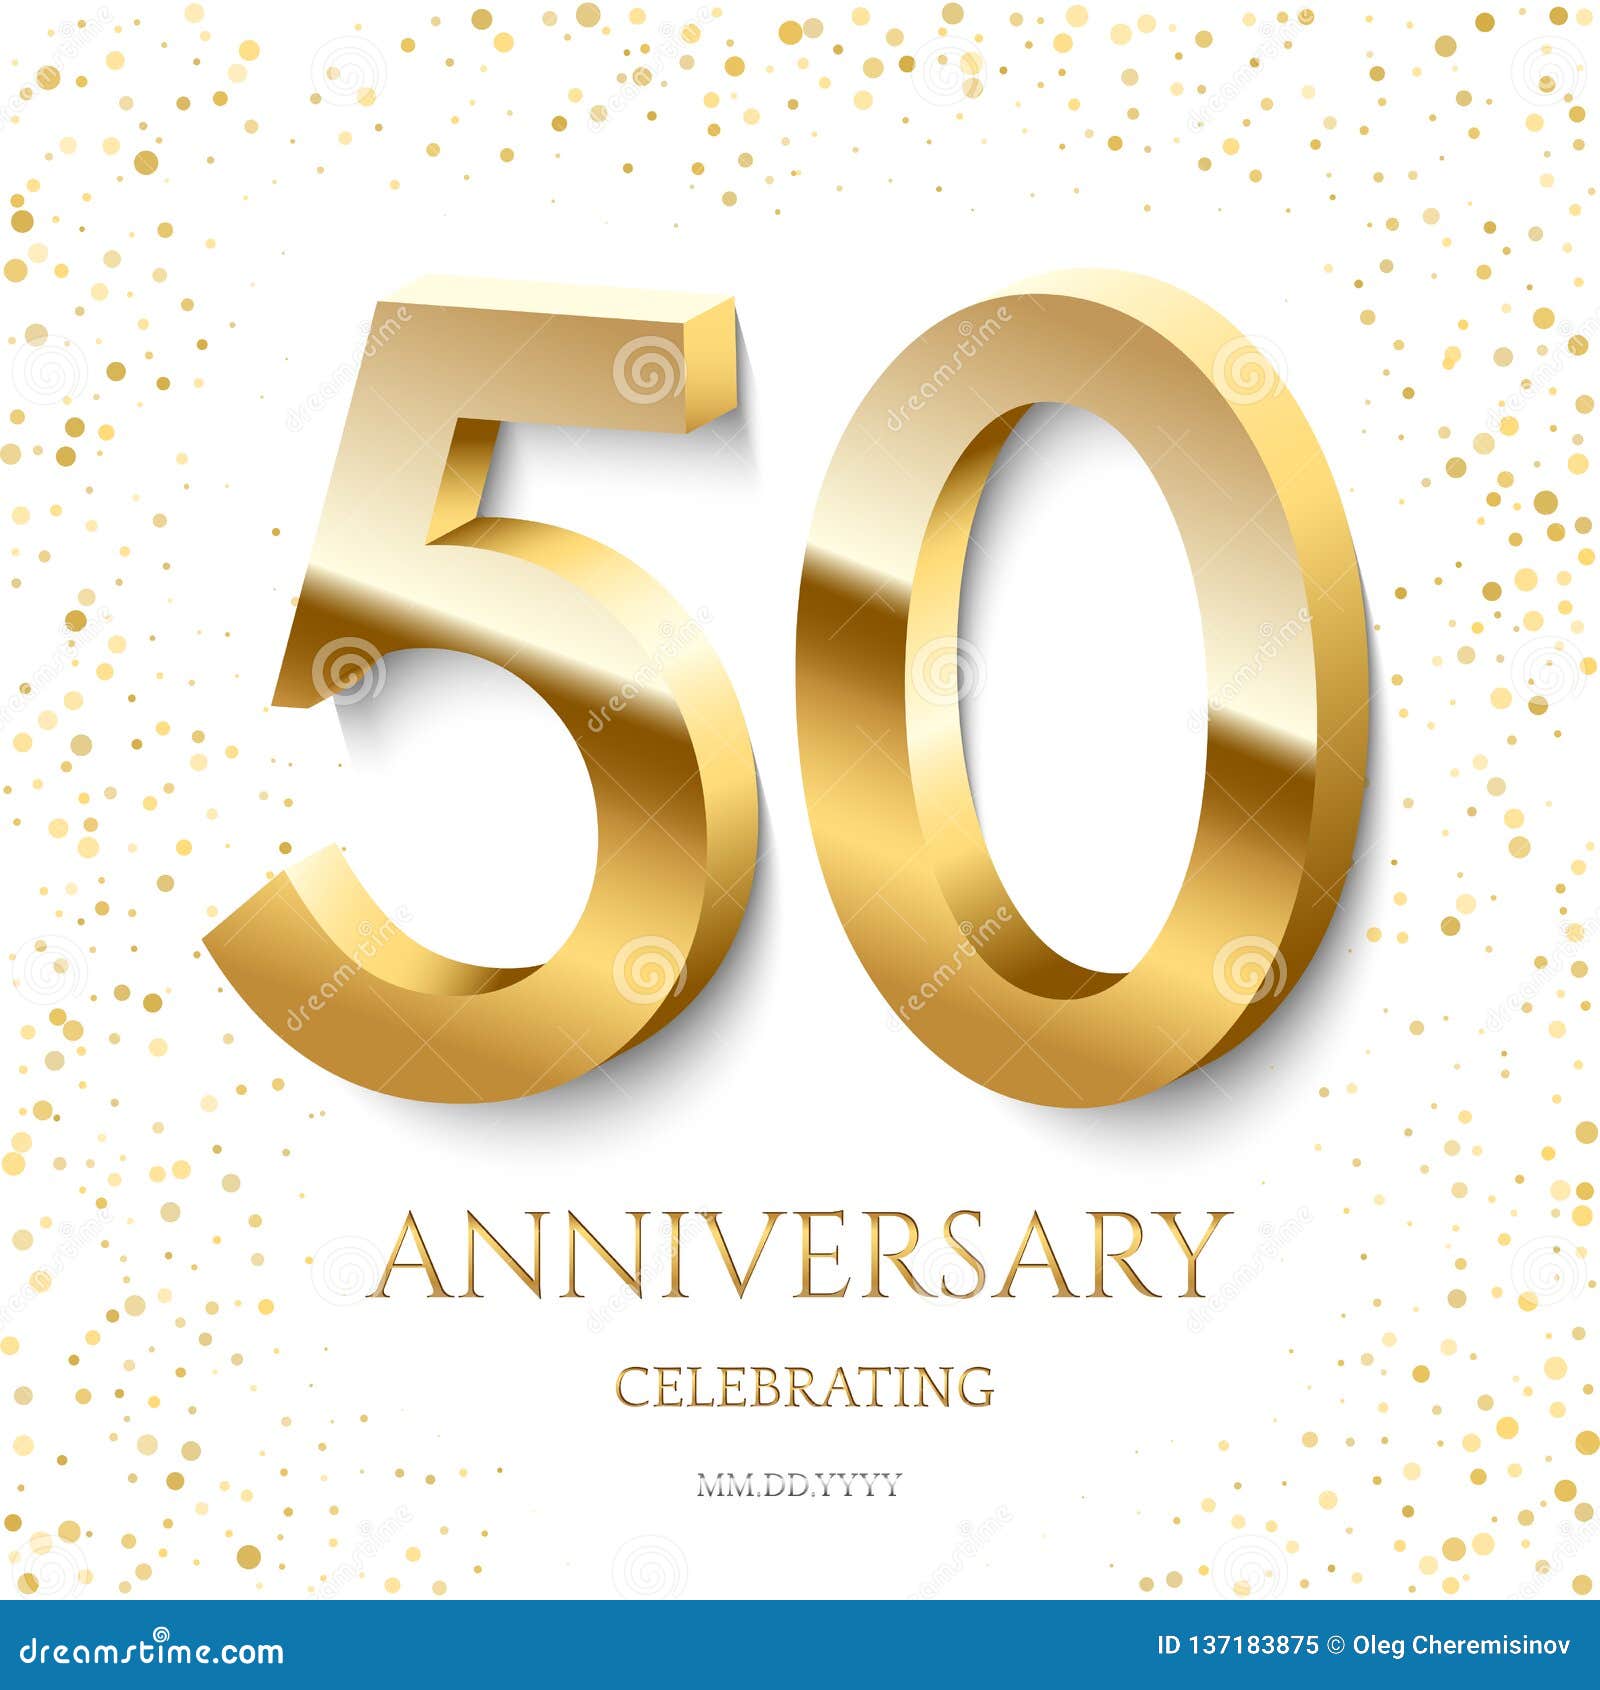 50th Years Anniversary Logo Design Stock Vector 